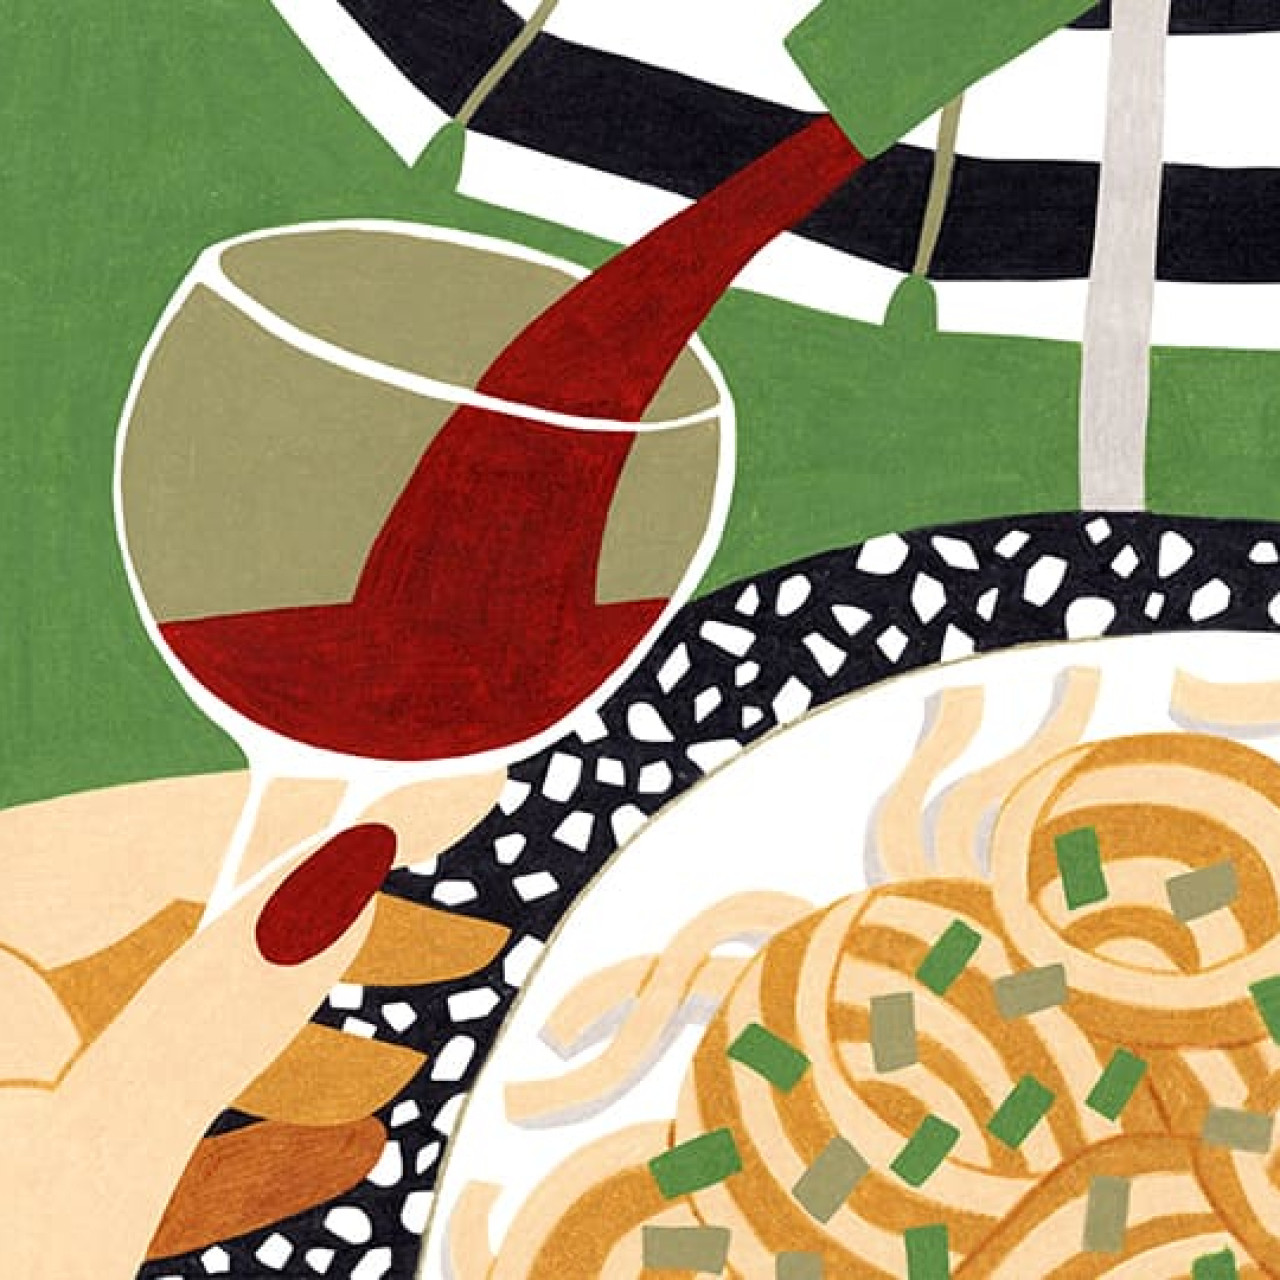 selection-of-4-autralian-wines-pasta-food-pairing-wine-magazine-eurocave.jpg